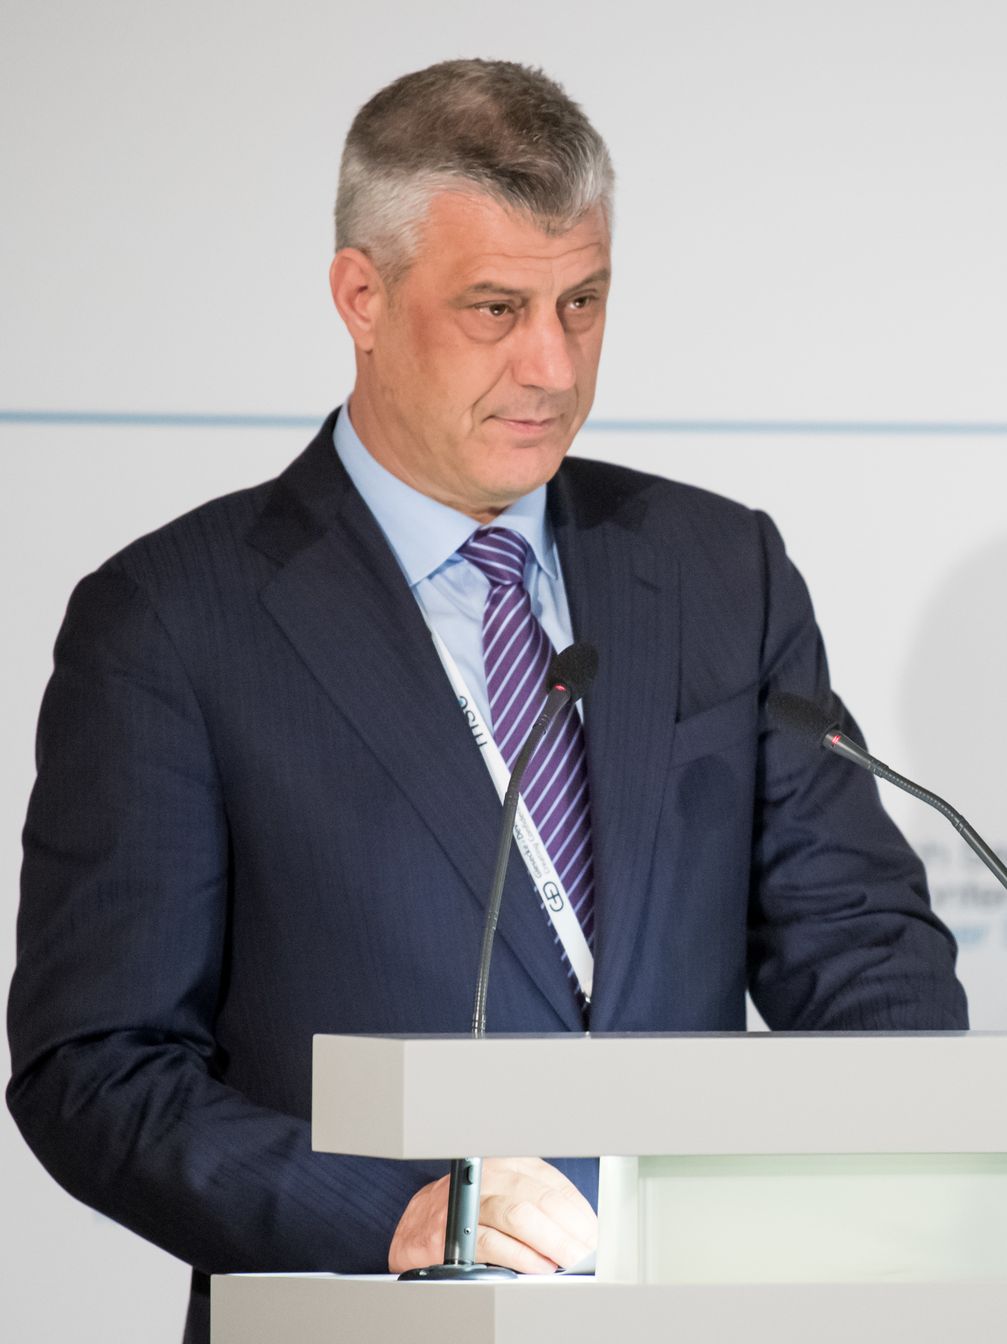 Hashim Thaçi (2018)